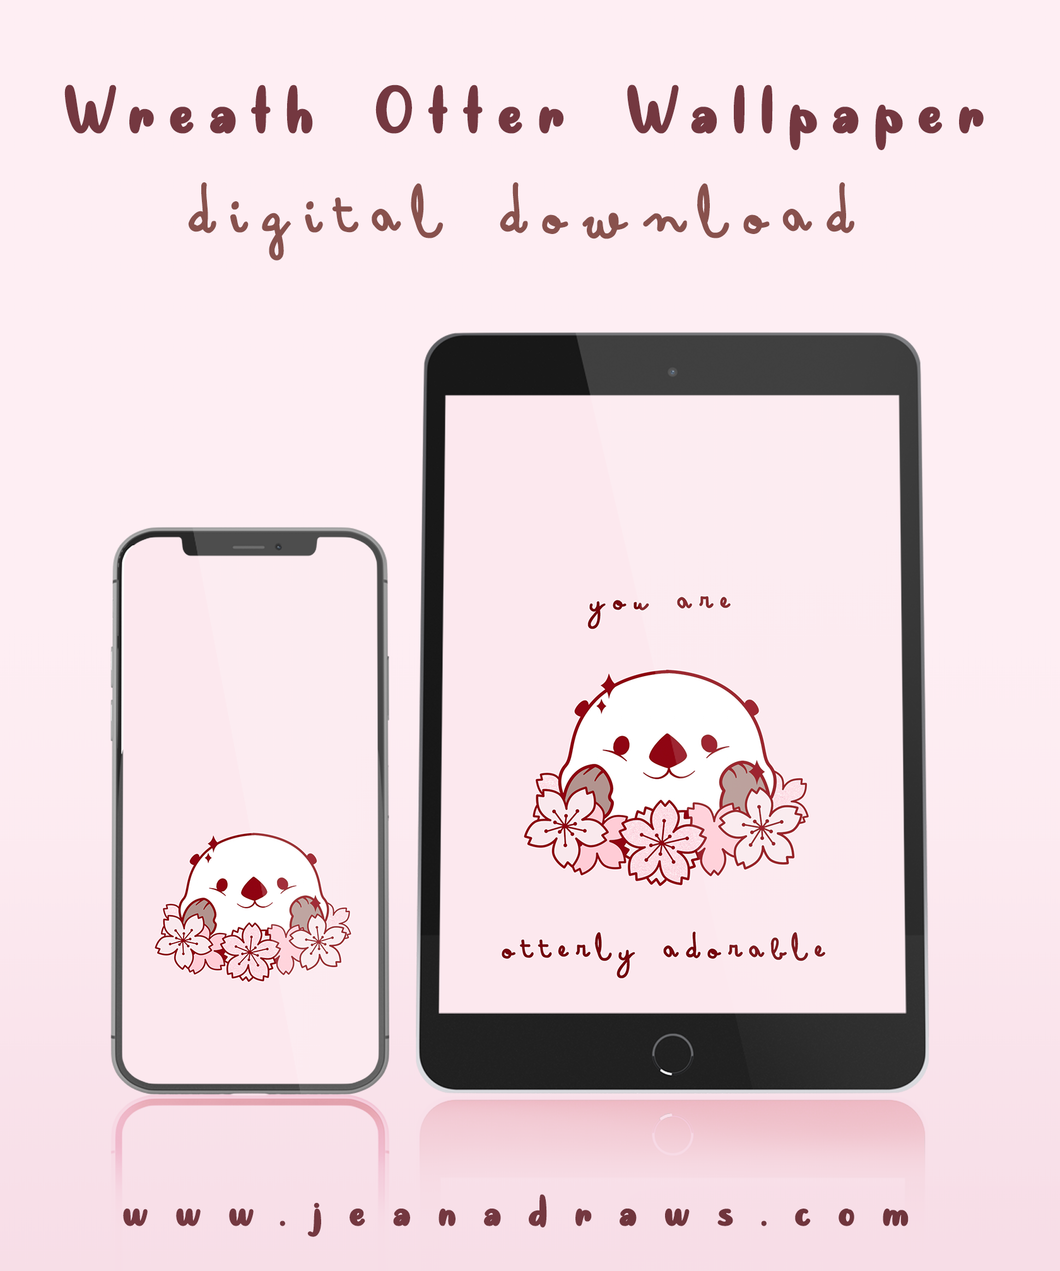 Wreath Otter Wallpaper [Digital Download]